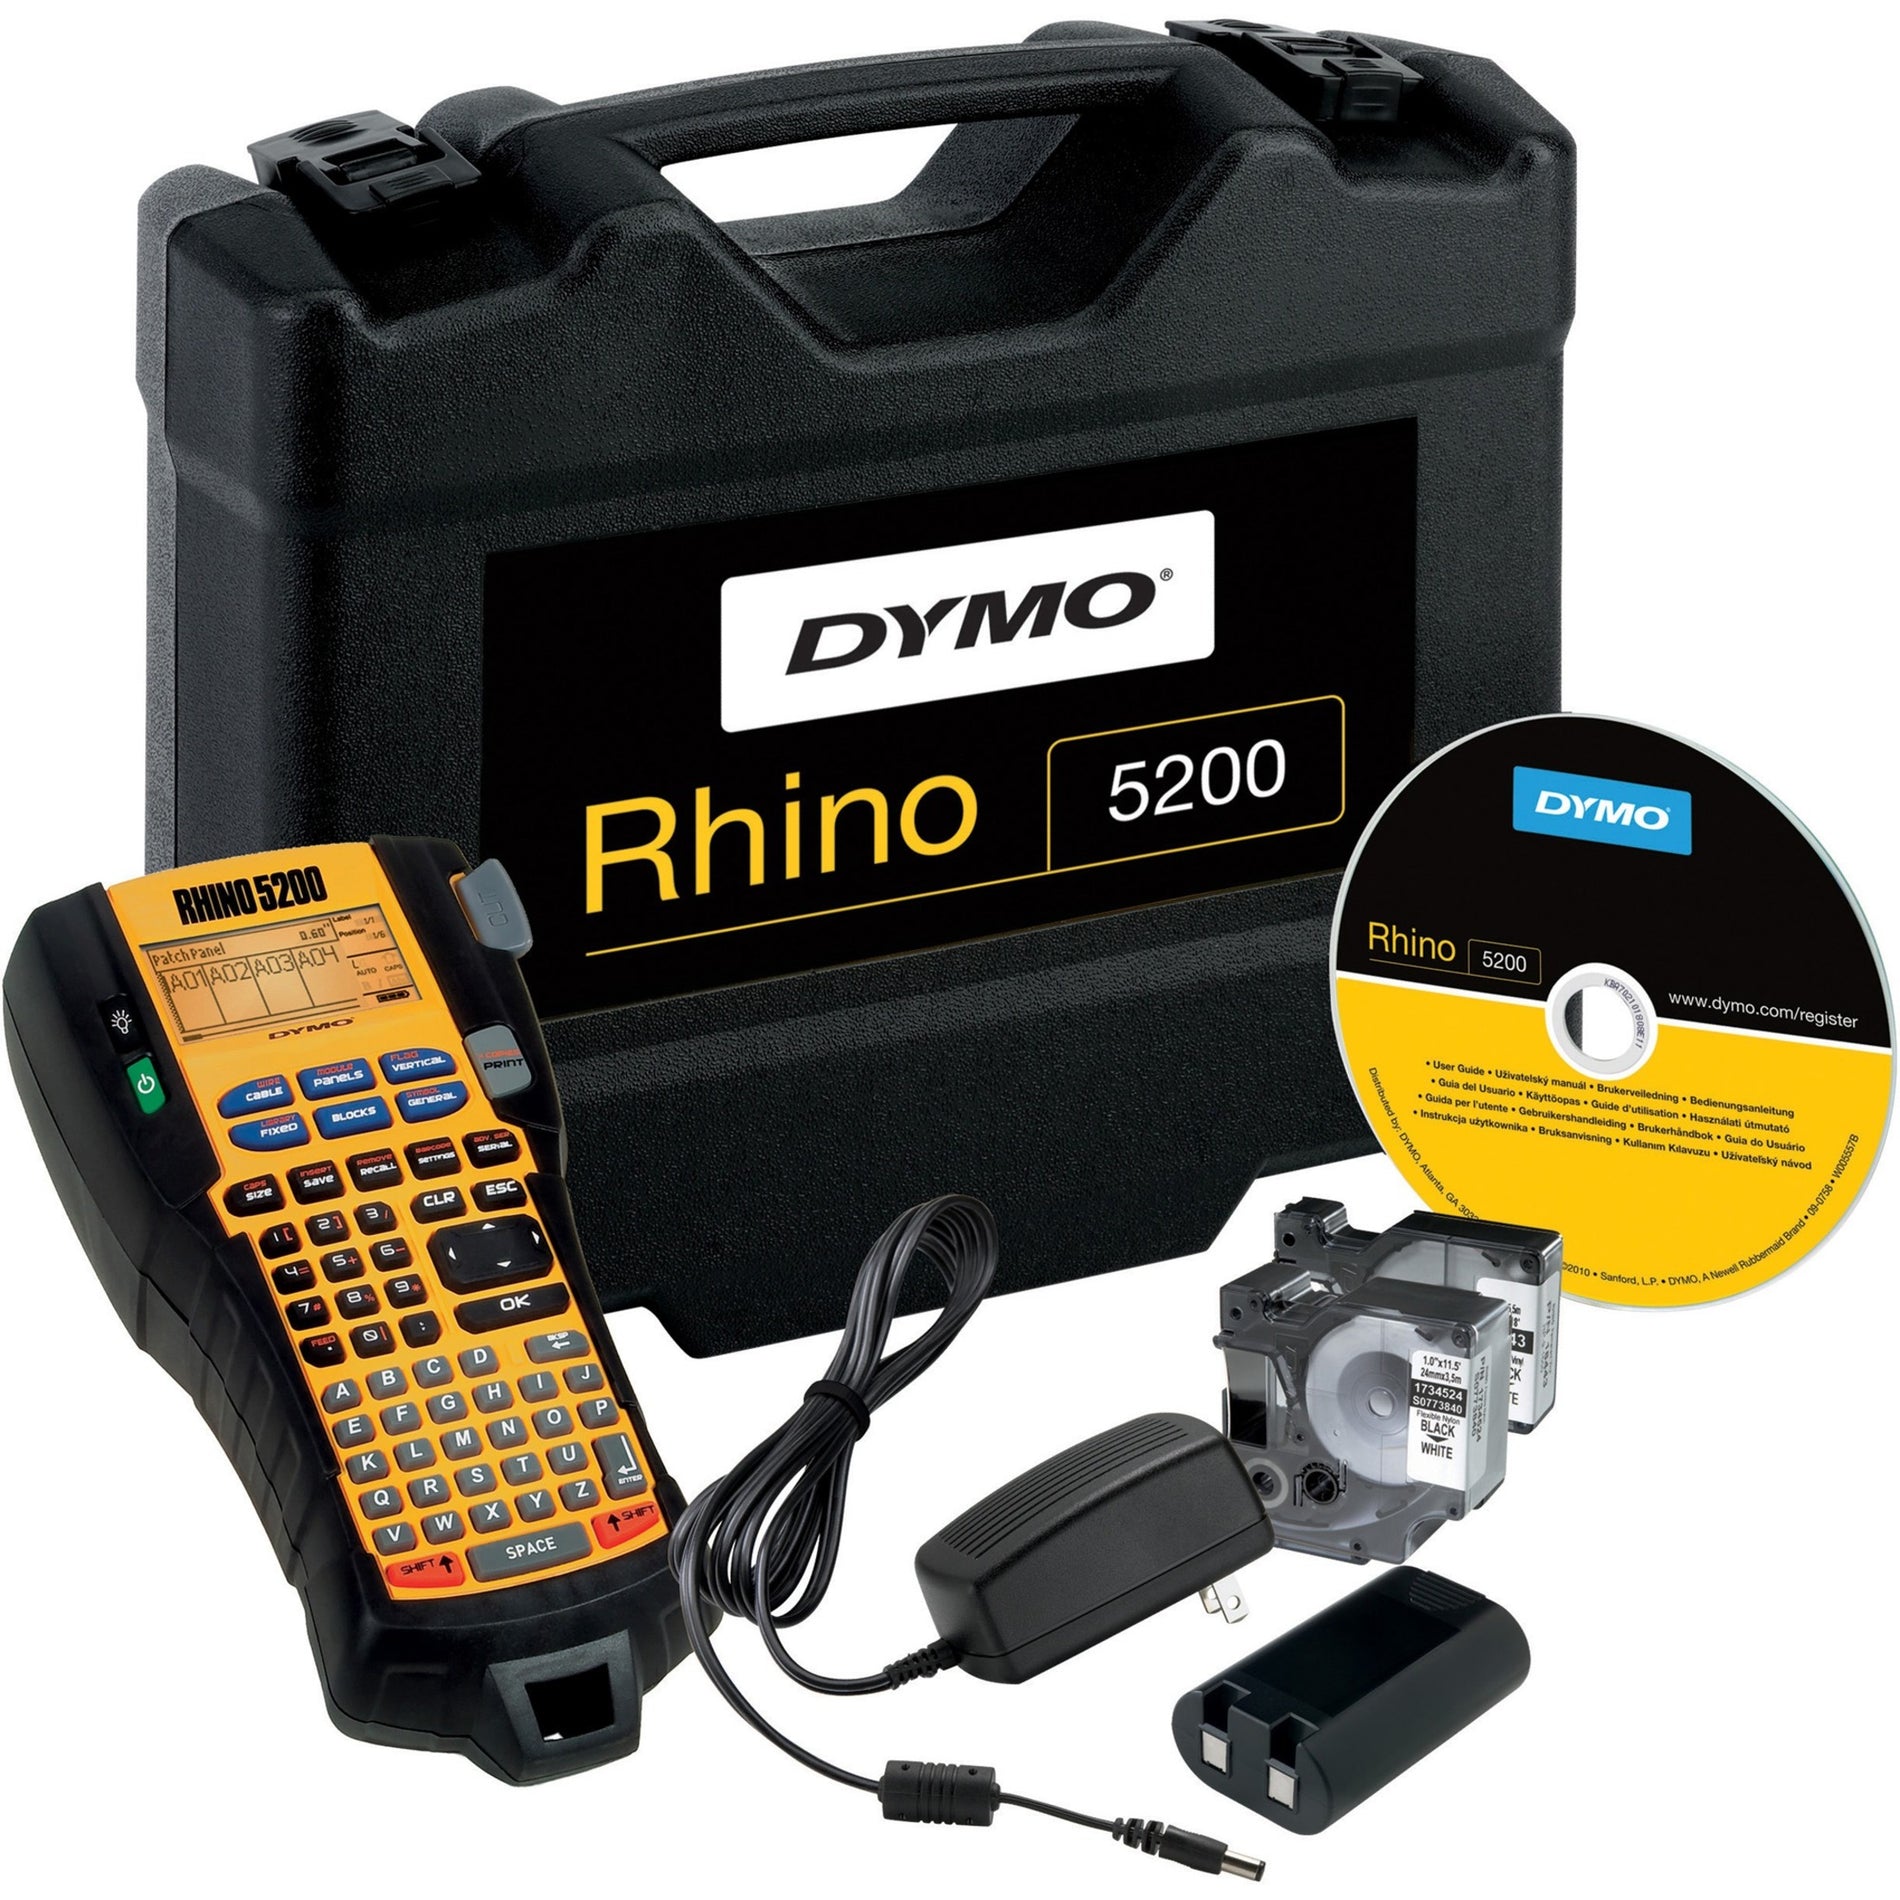 Dymo 1756589 Rhino 5200 Labelmaker Kit, Black and Yellow, Industrial Label Printer